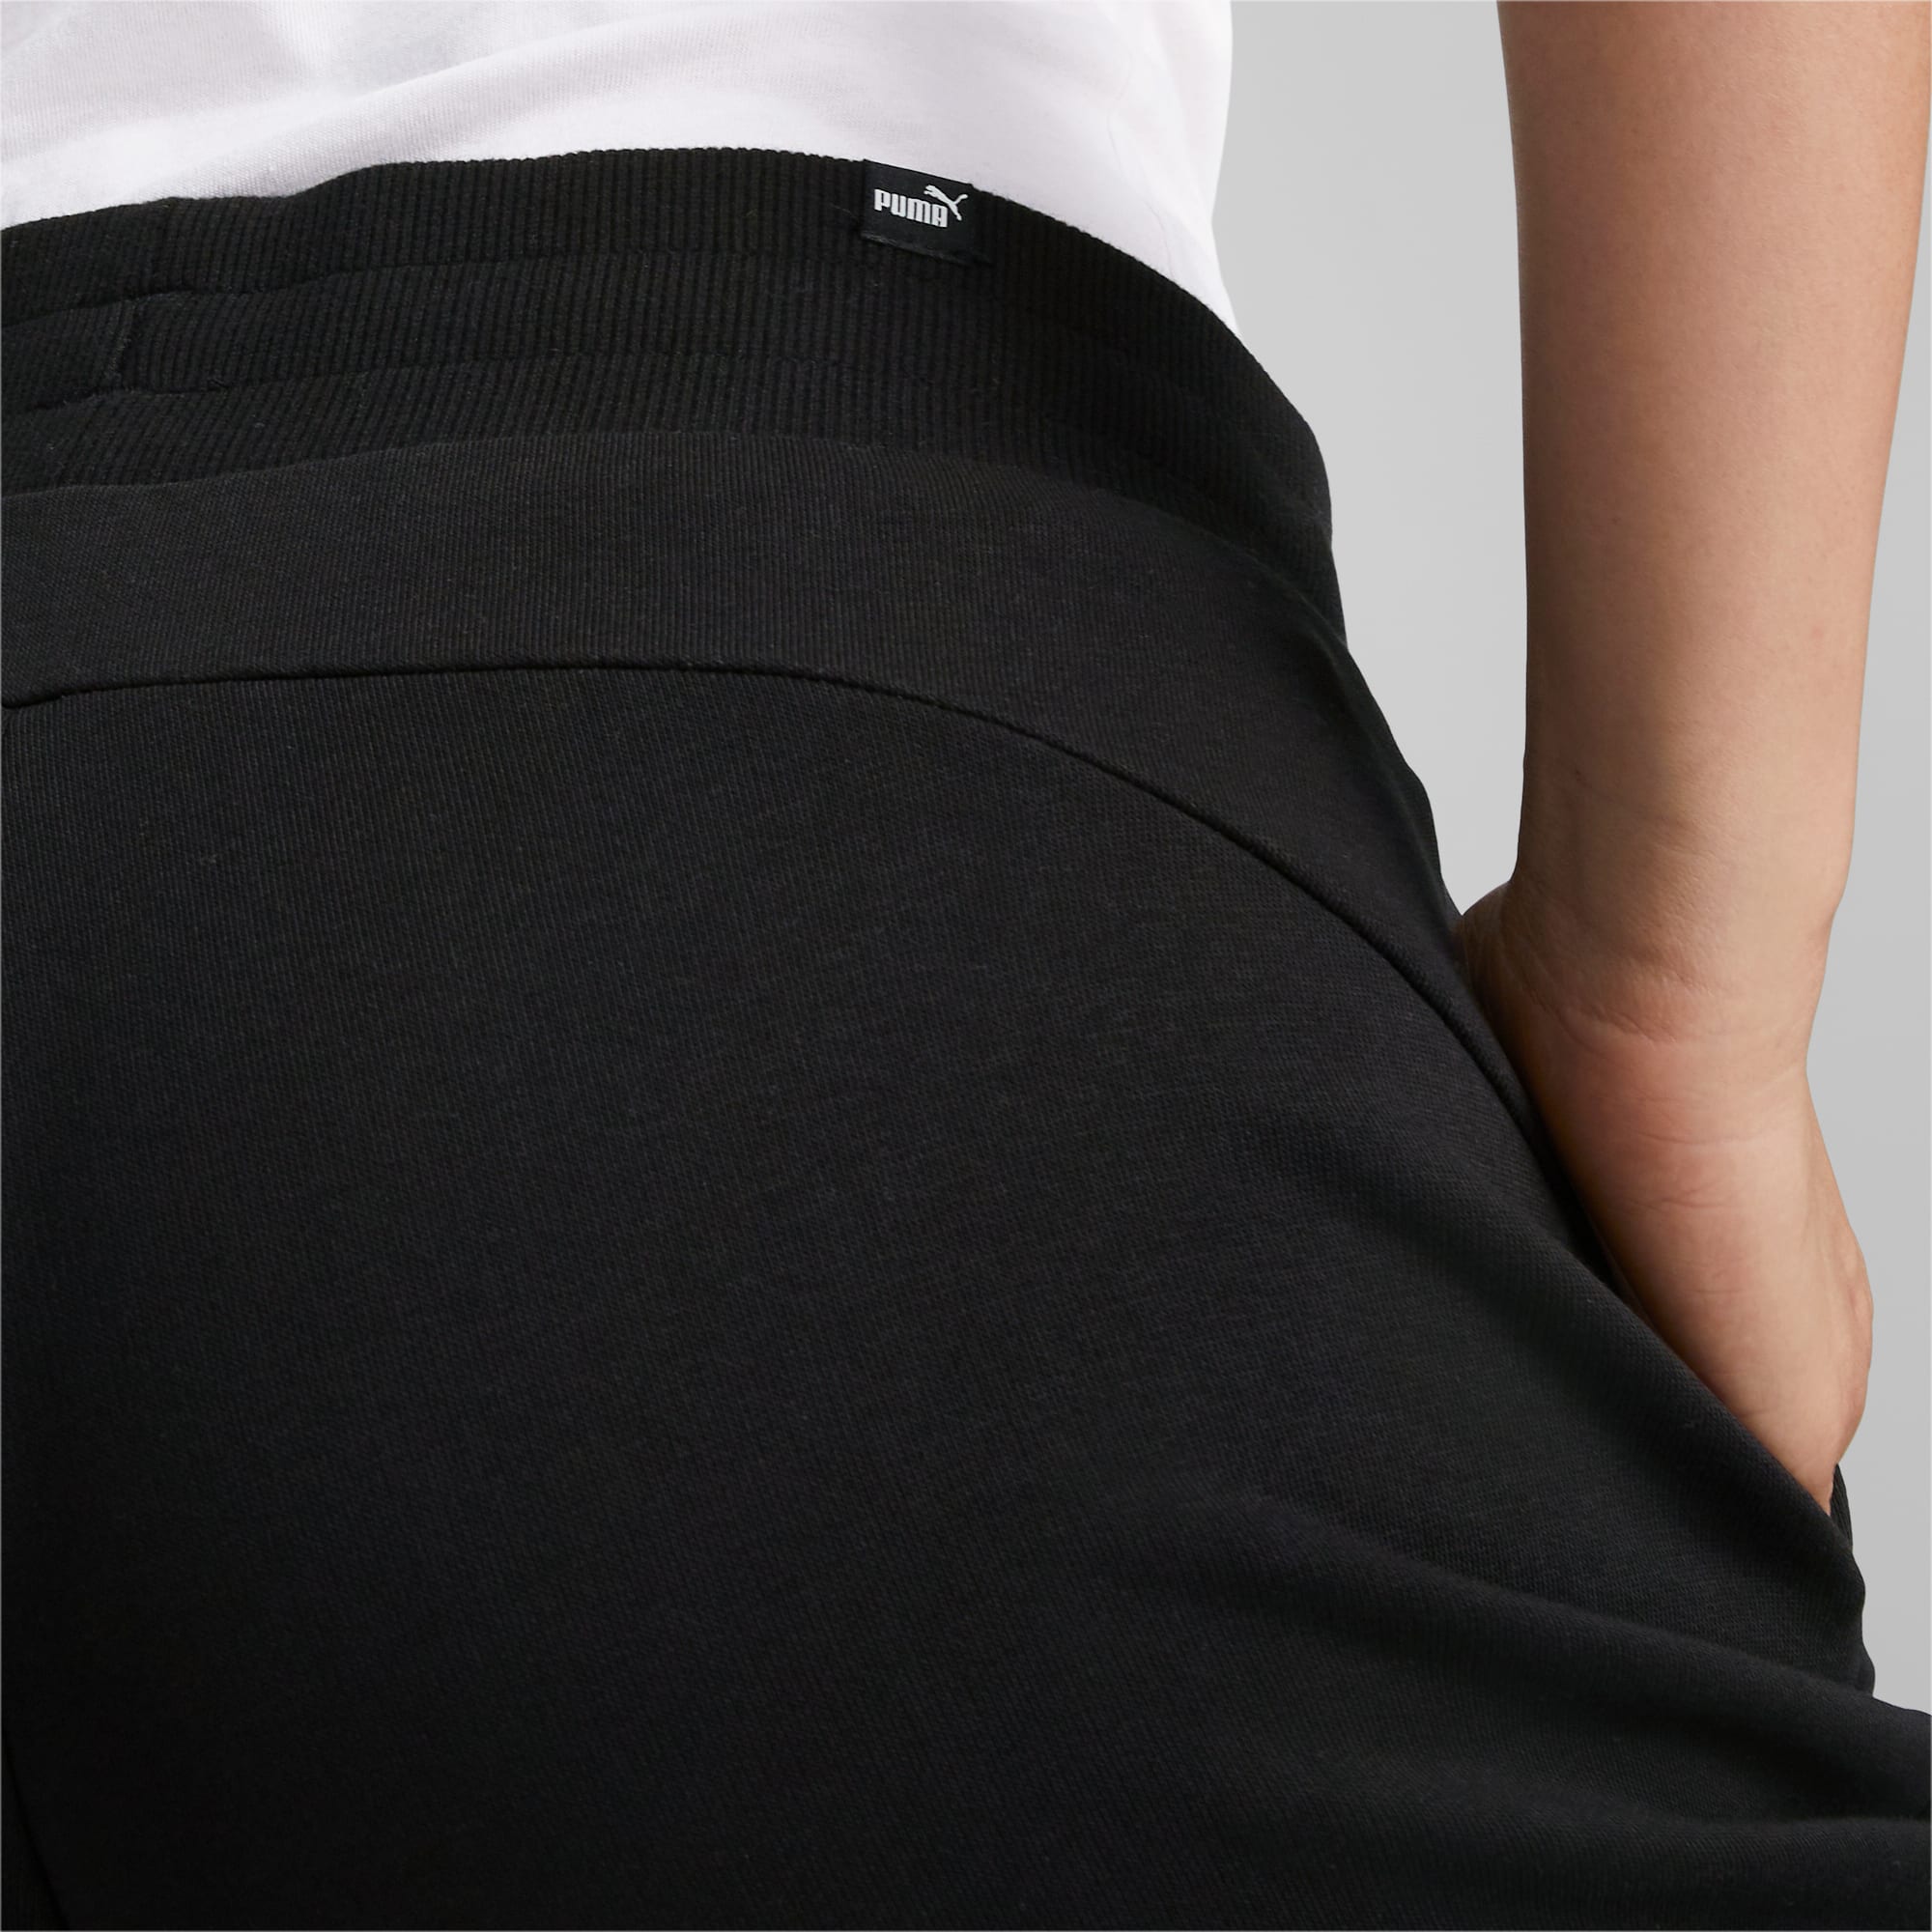 PUMA x PEANUTS sweatpants Grey Women's Size M [531160-04] Rare